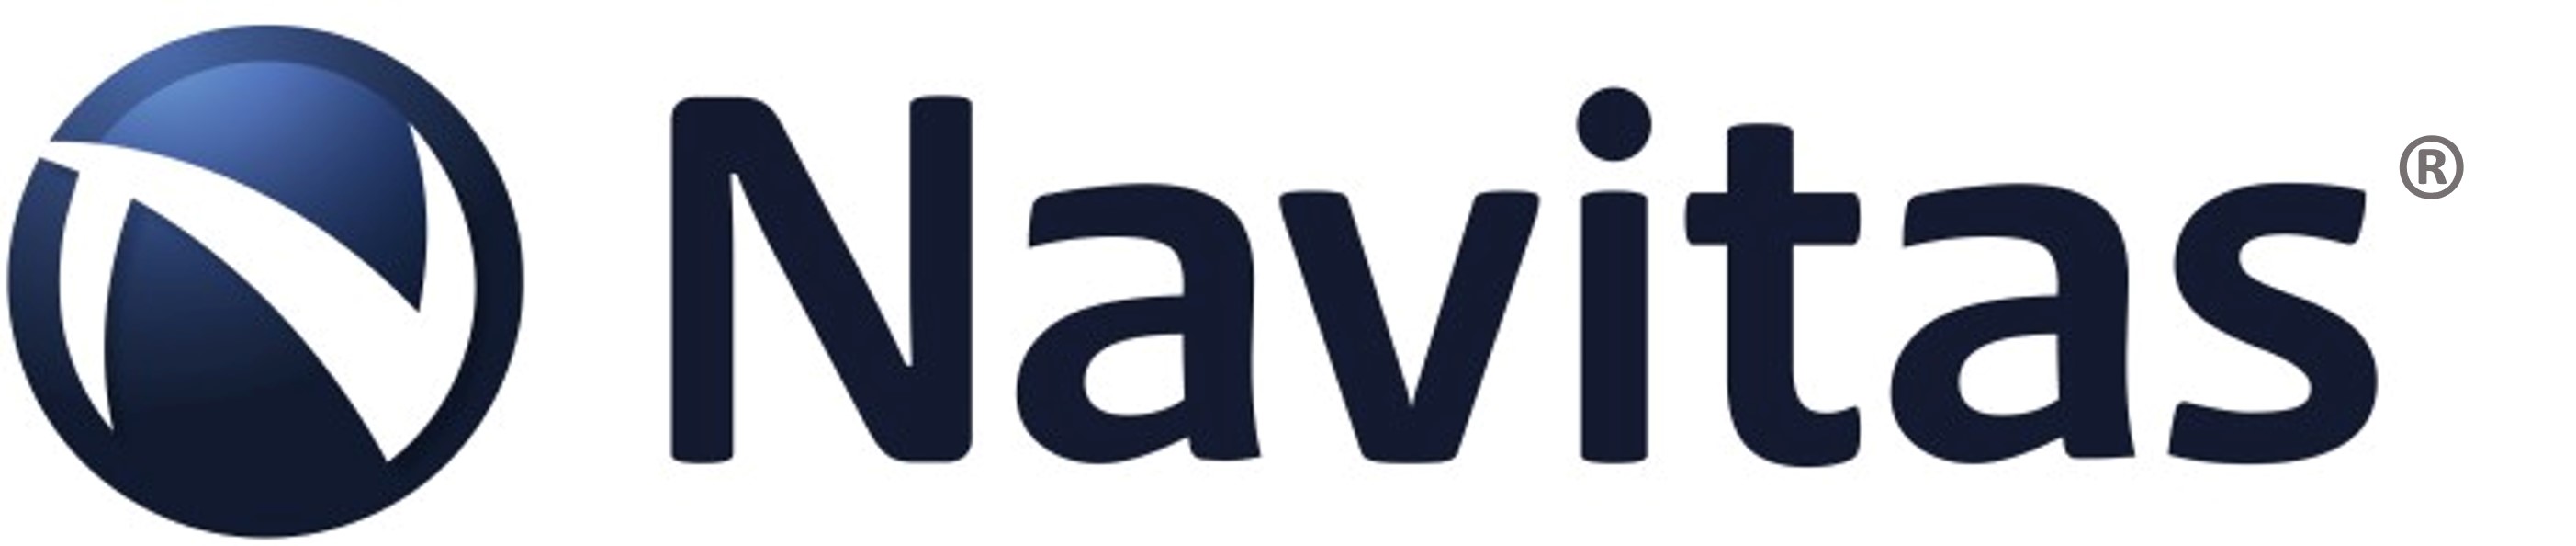 Navitas Logo(R) (SELECT).jpg